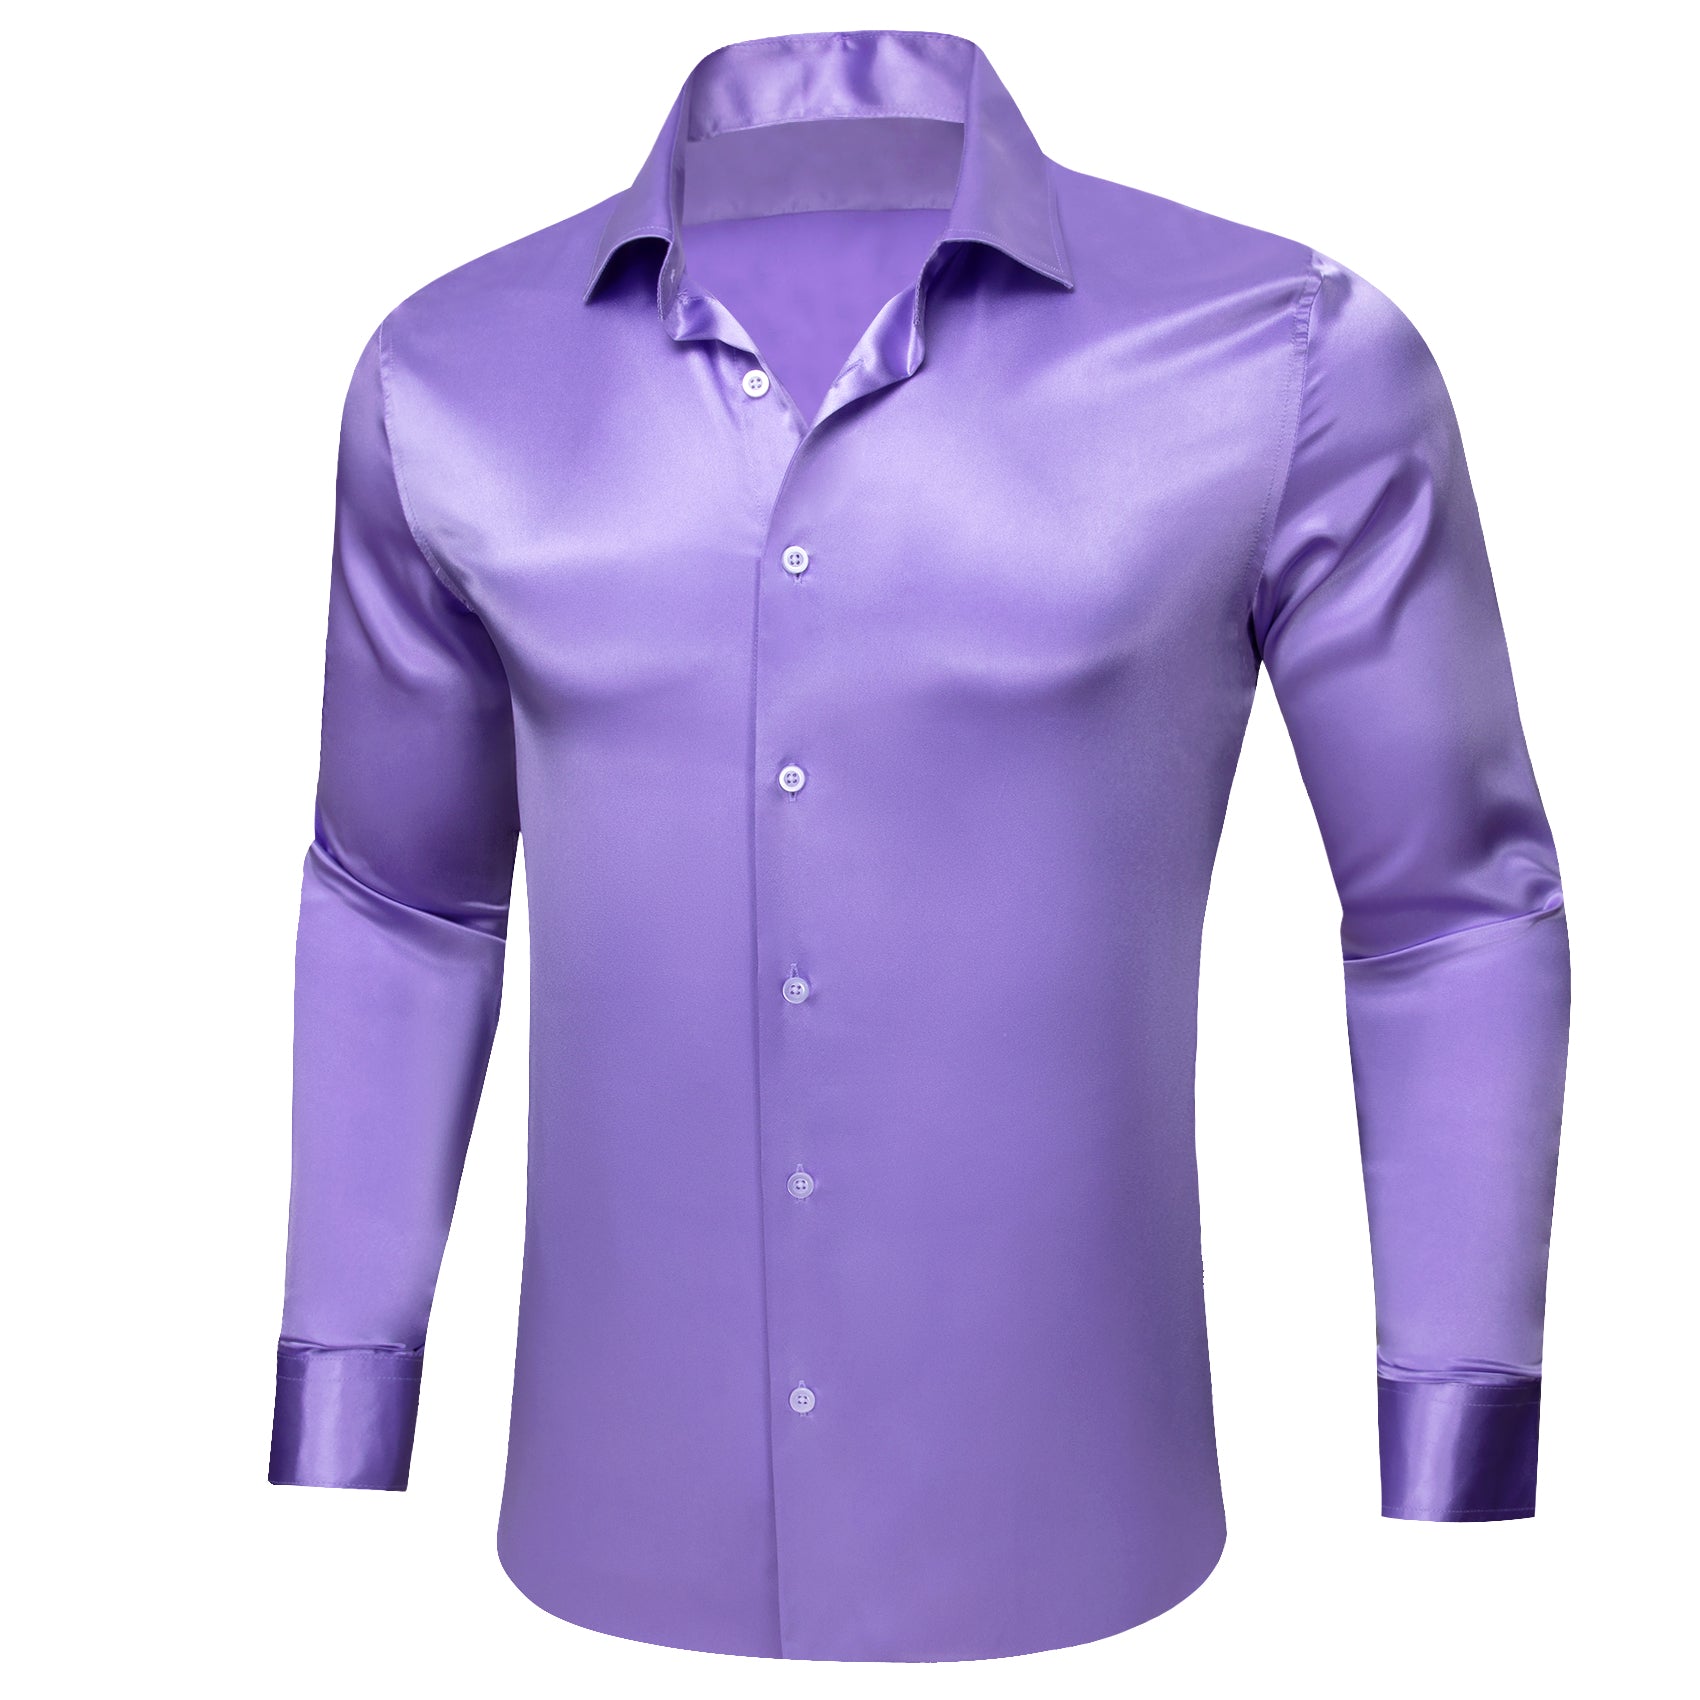 Barry.wang Casual Purple Solid Silk Men's Long Sleeve Shirt